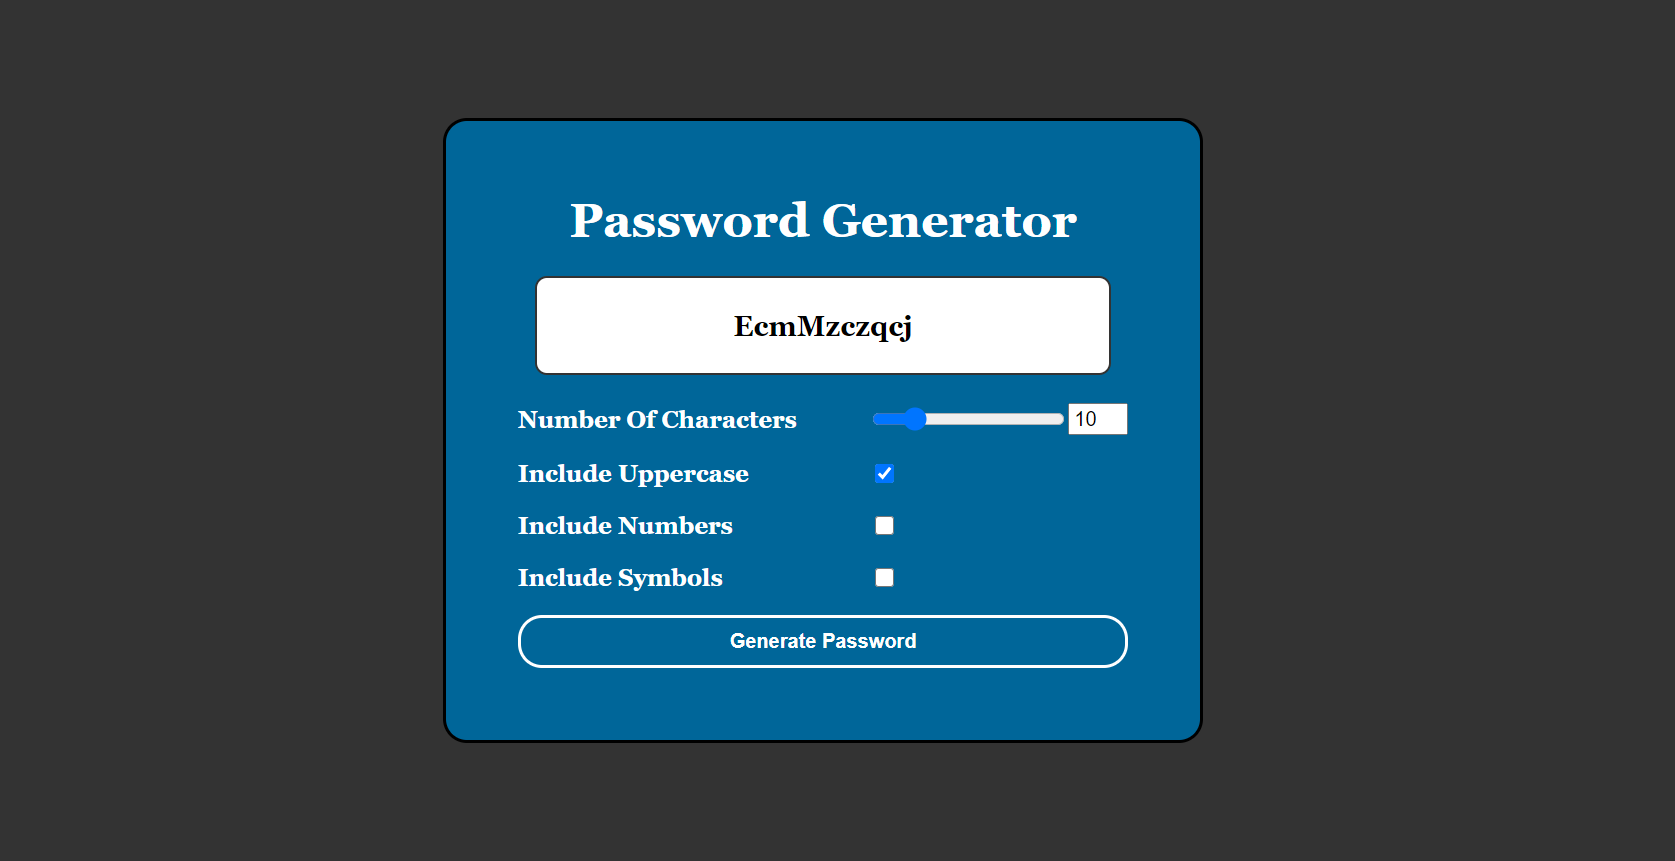 avast random password generator